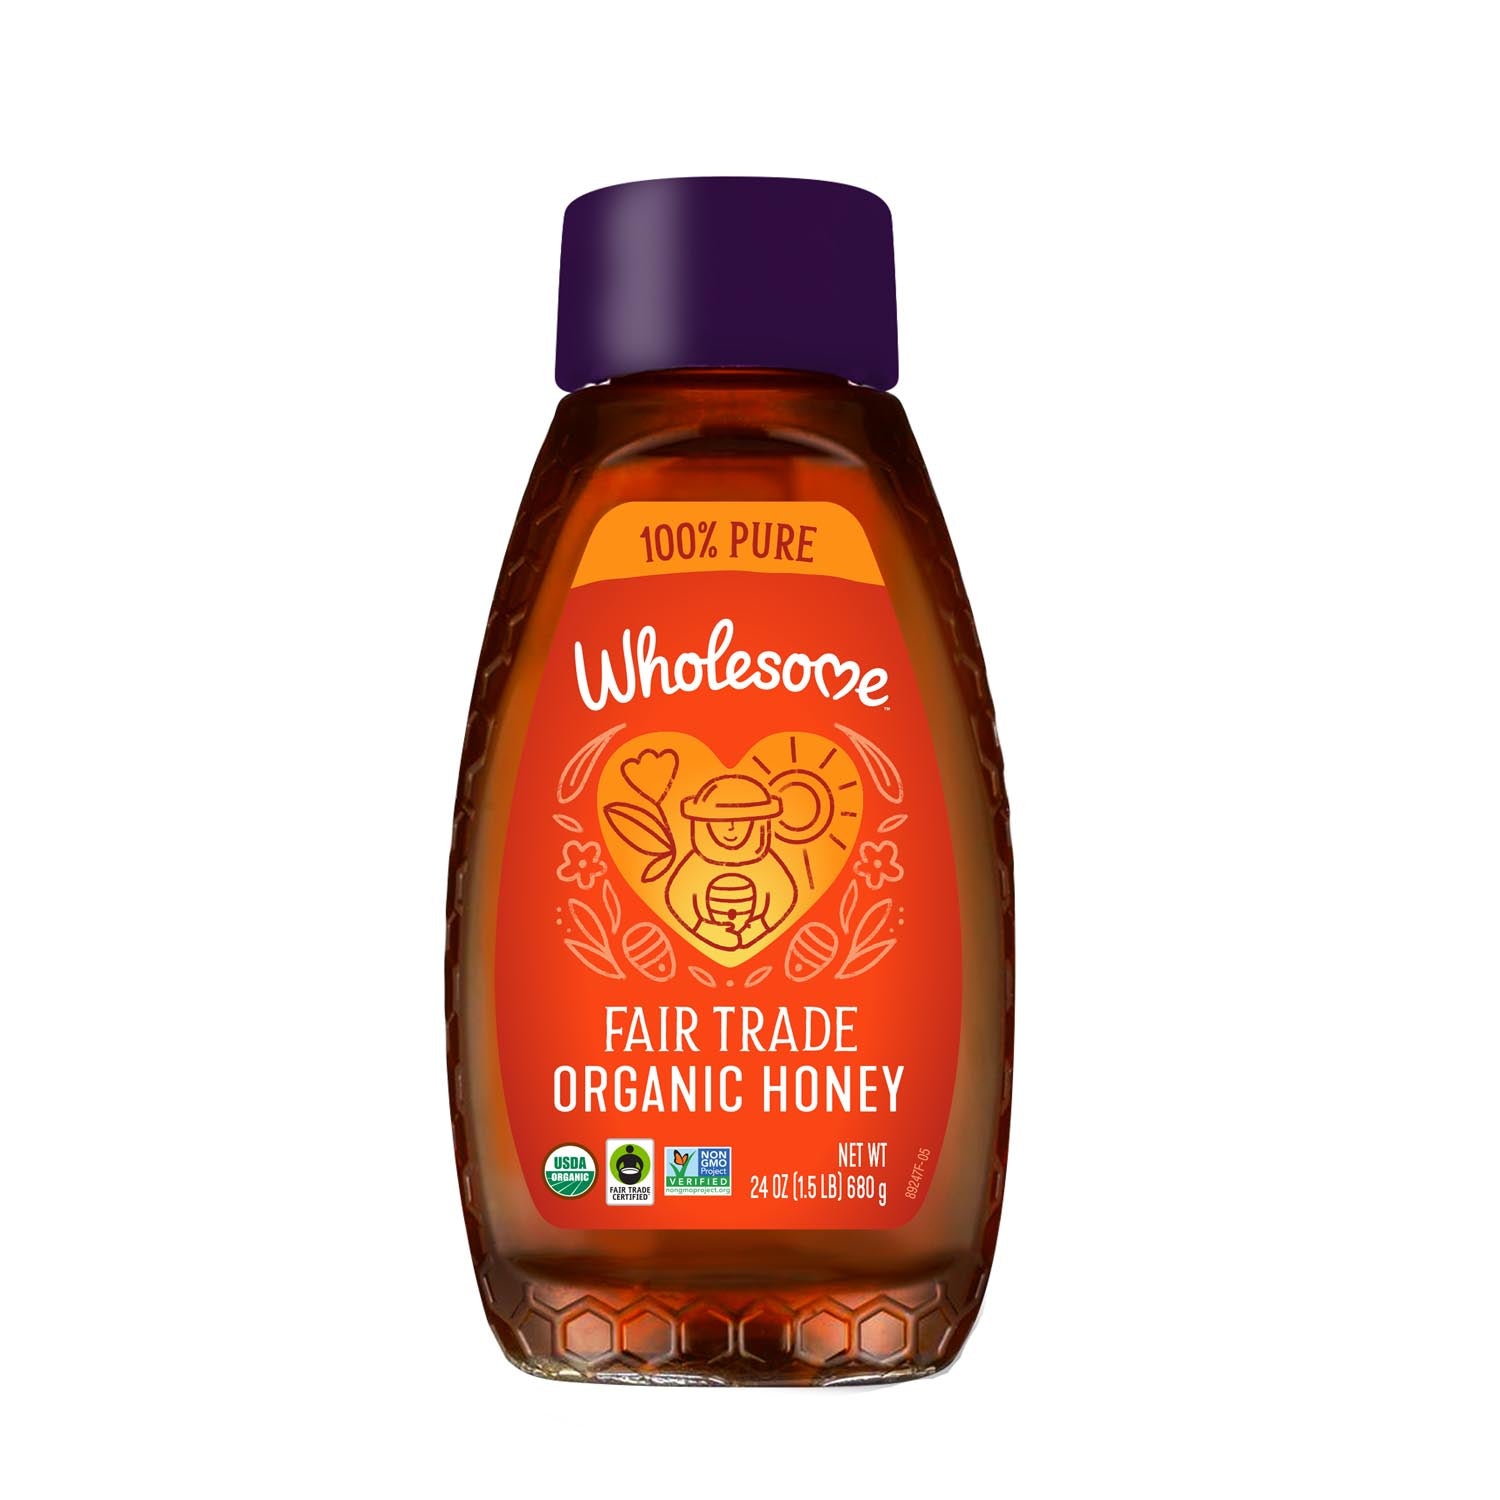 Wholesome Fair Trade Organic Honey - 6ct/24oz Bottle